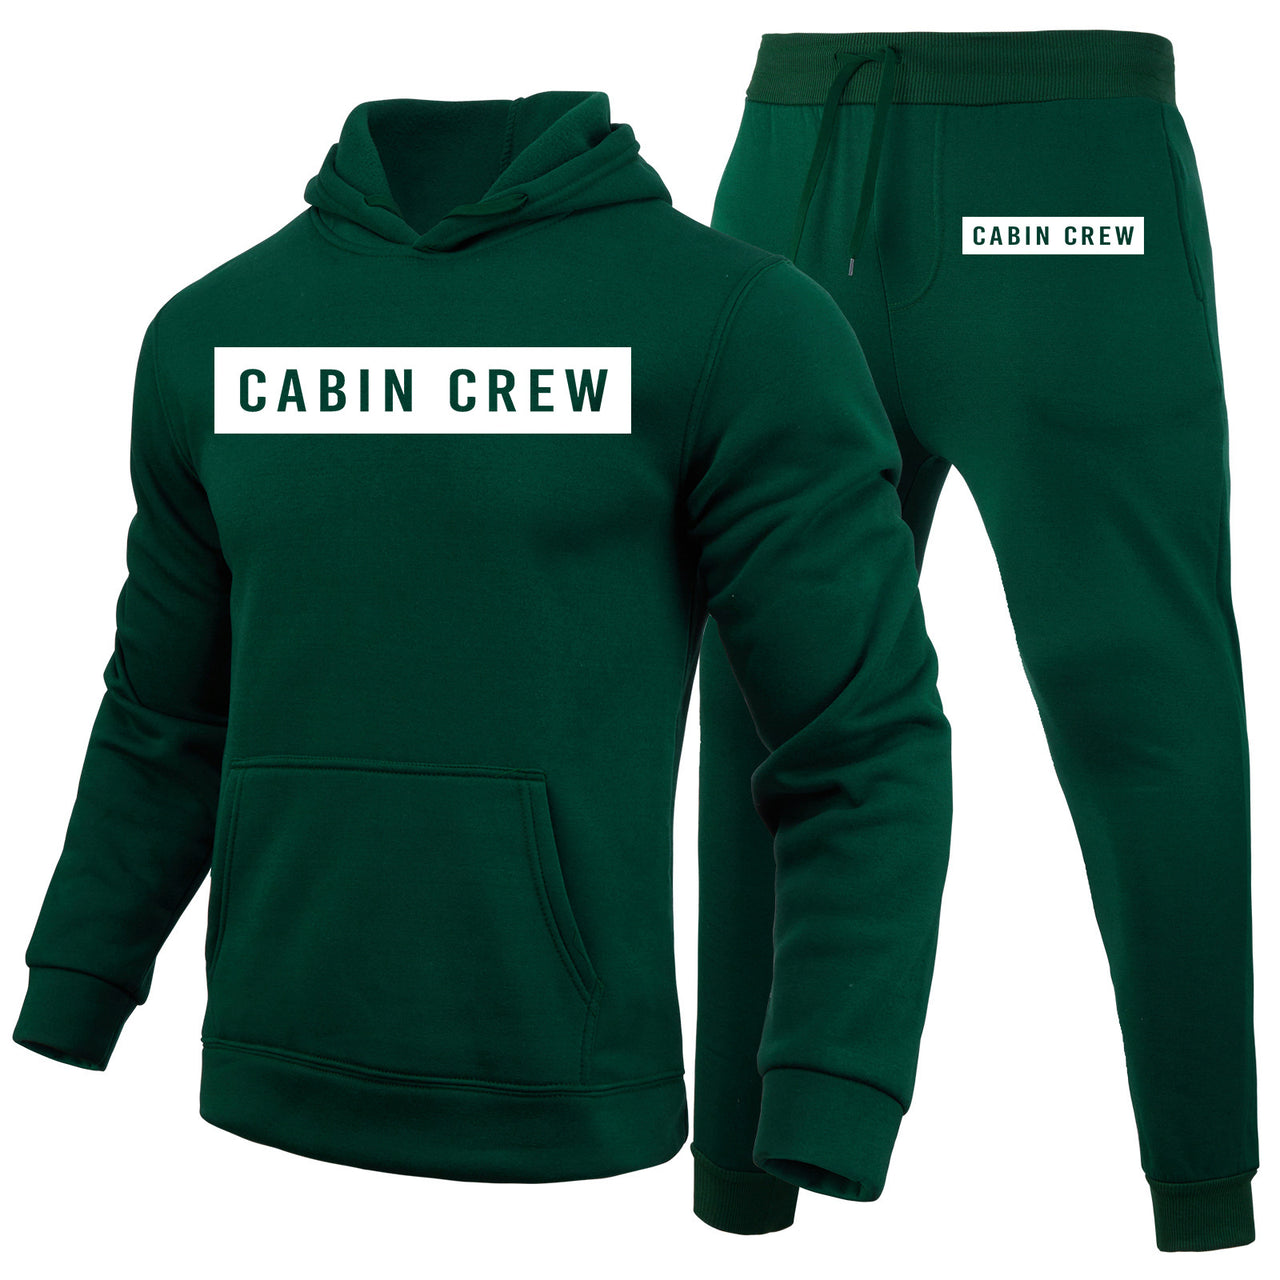 Cabin Crew Text Designed Hoodies & Sweatpants Set